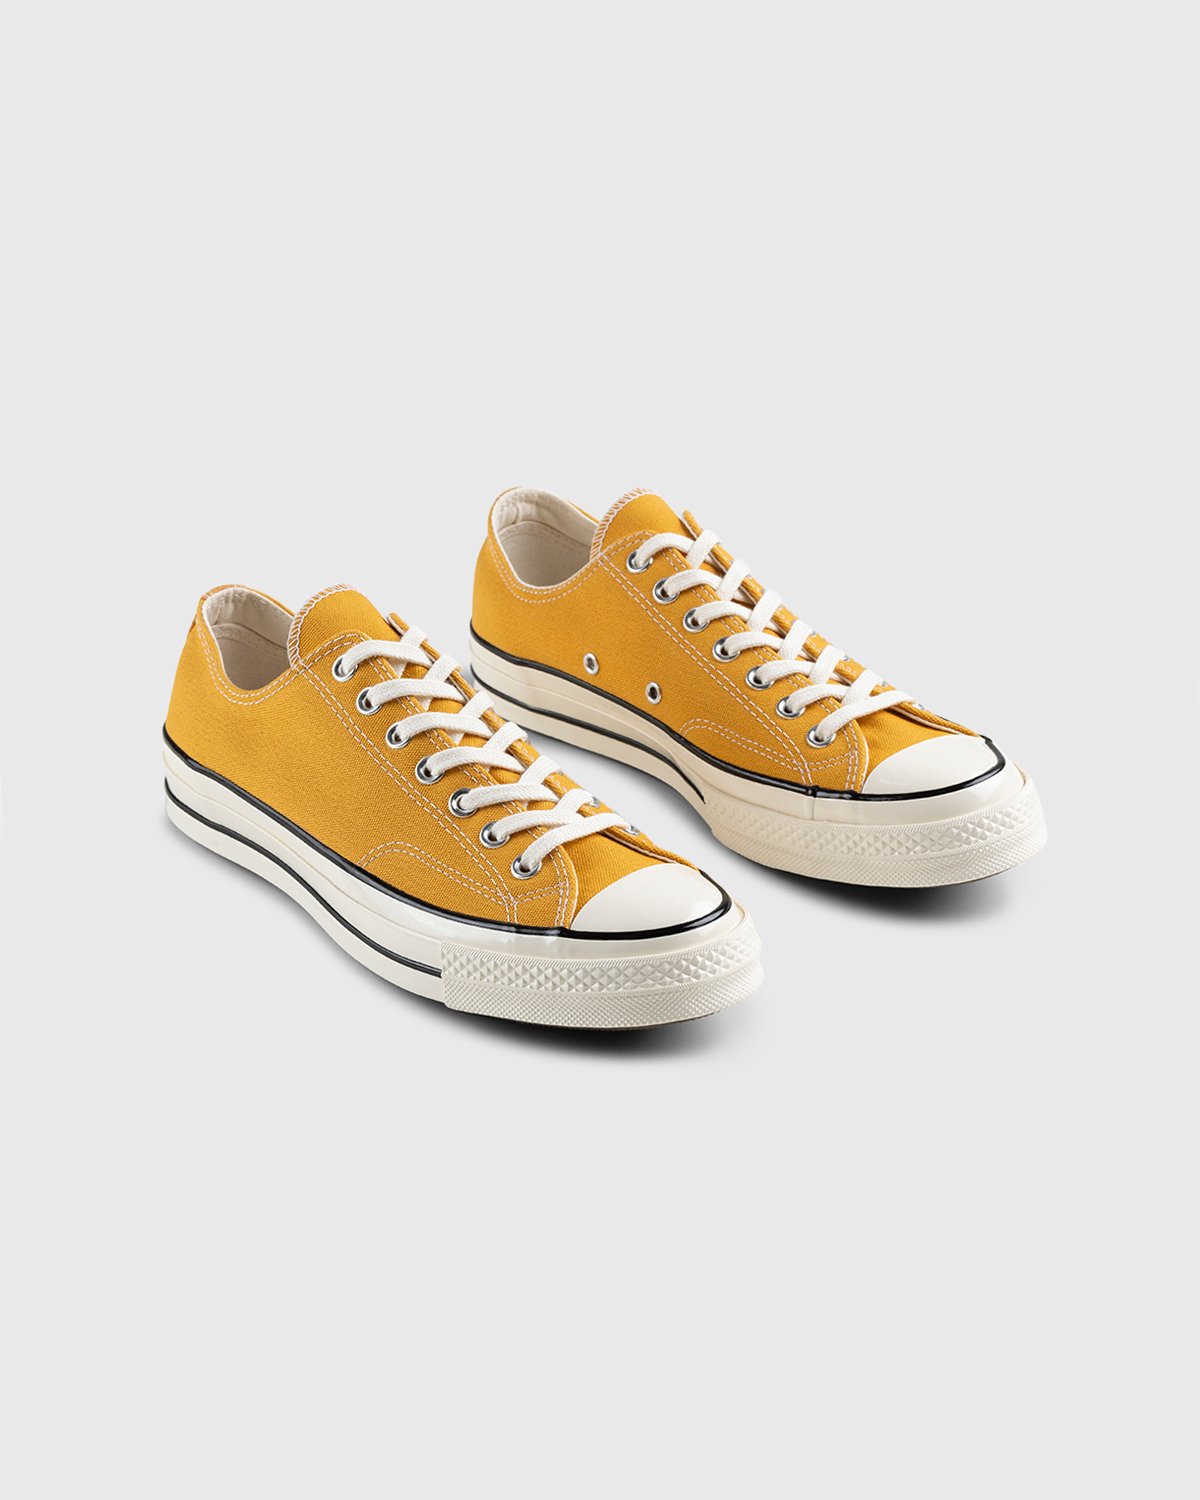 Converse - Chuck 70 Ox Sunflower/Black/Egret - Footwear - Orange - Image 4